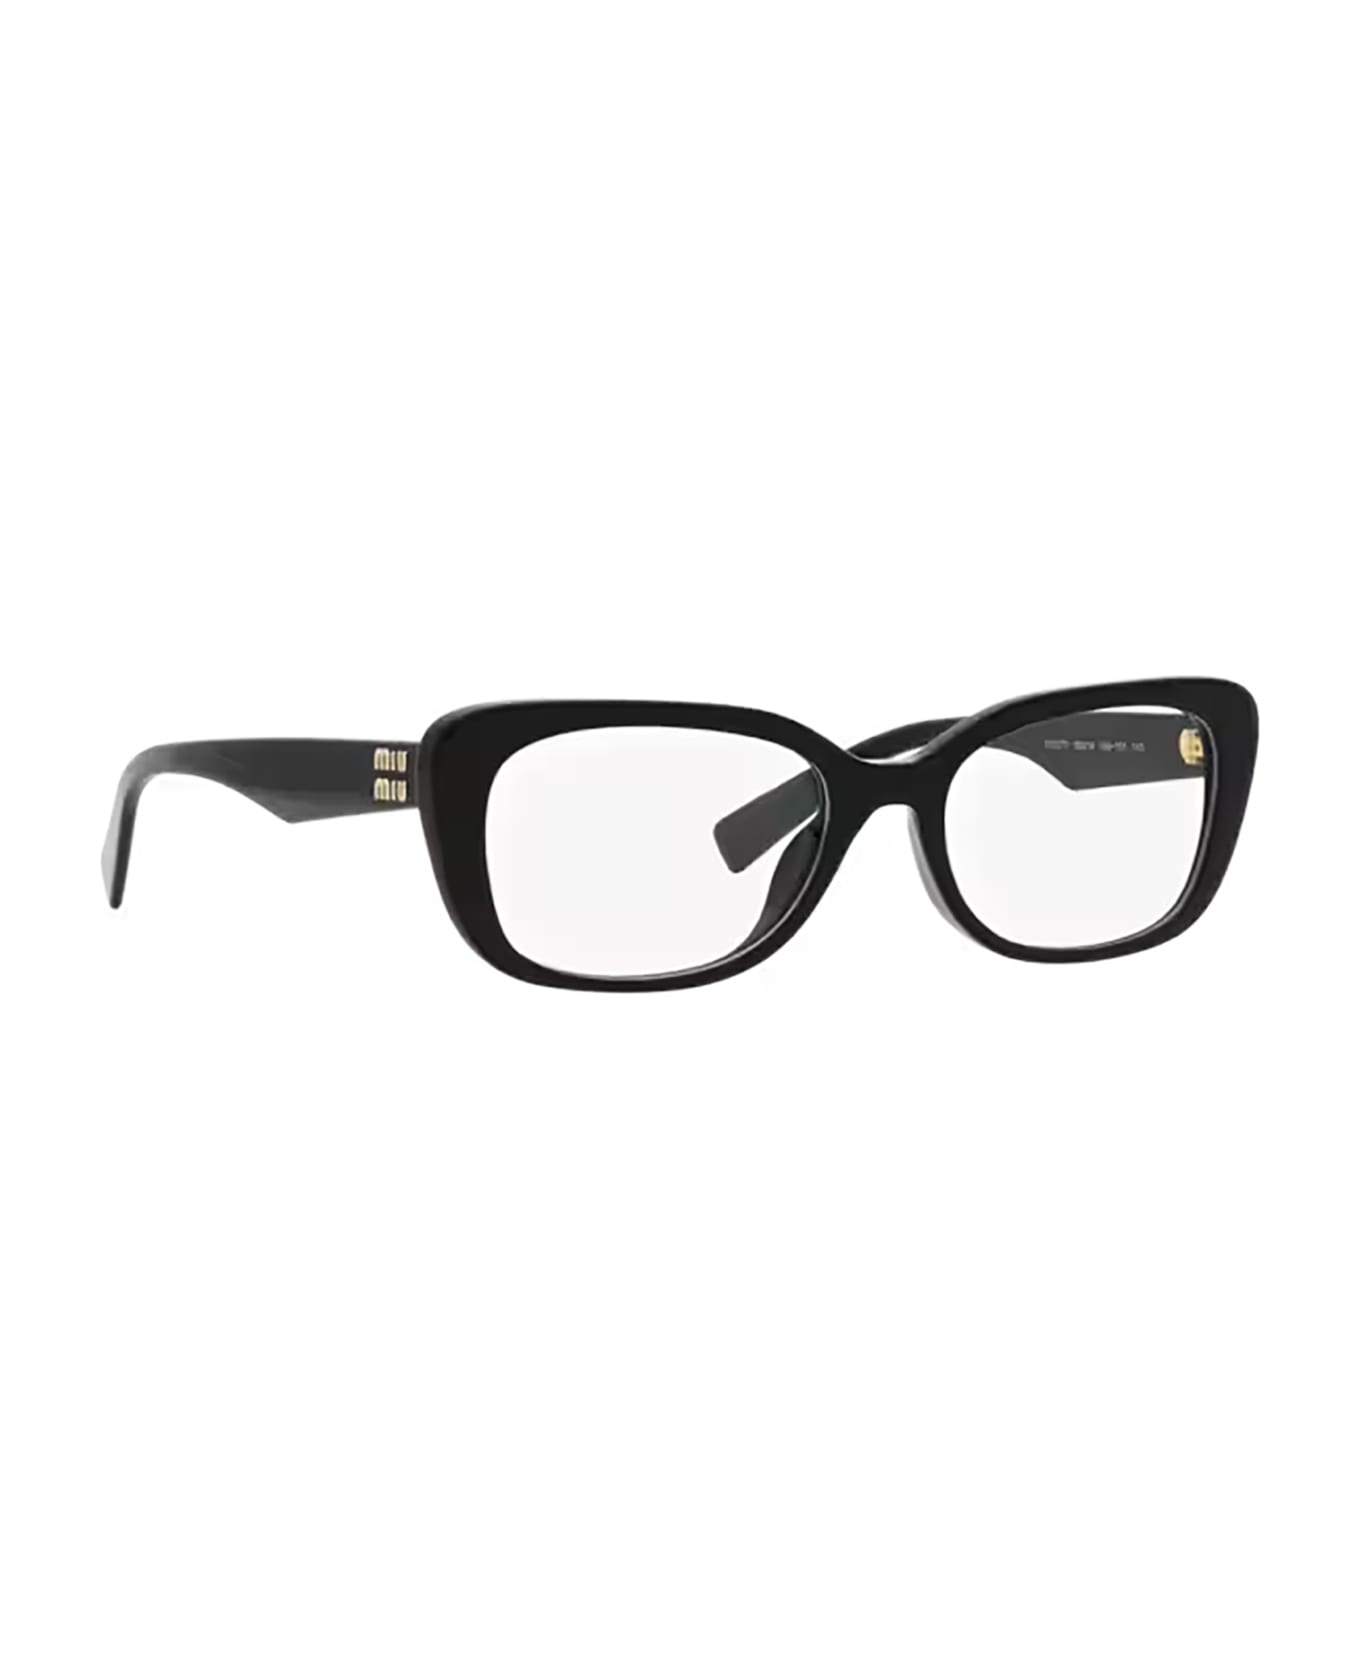 Miu Miu Eyewear Mu 07vv Black Glasses - Black